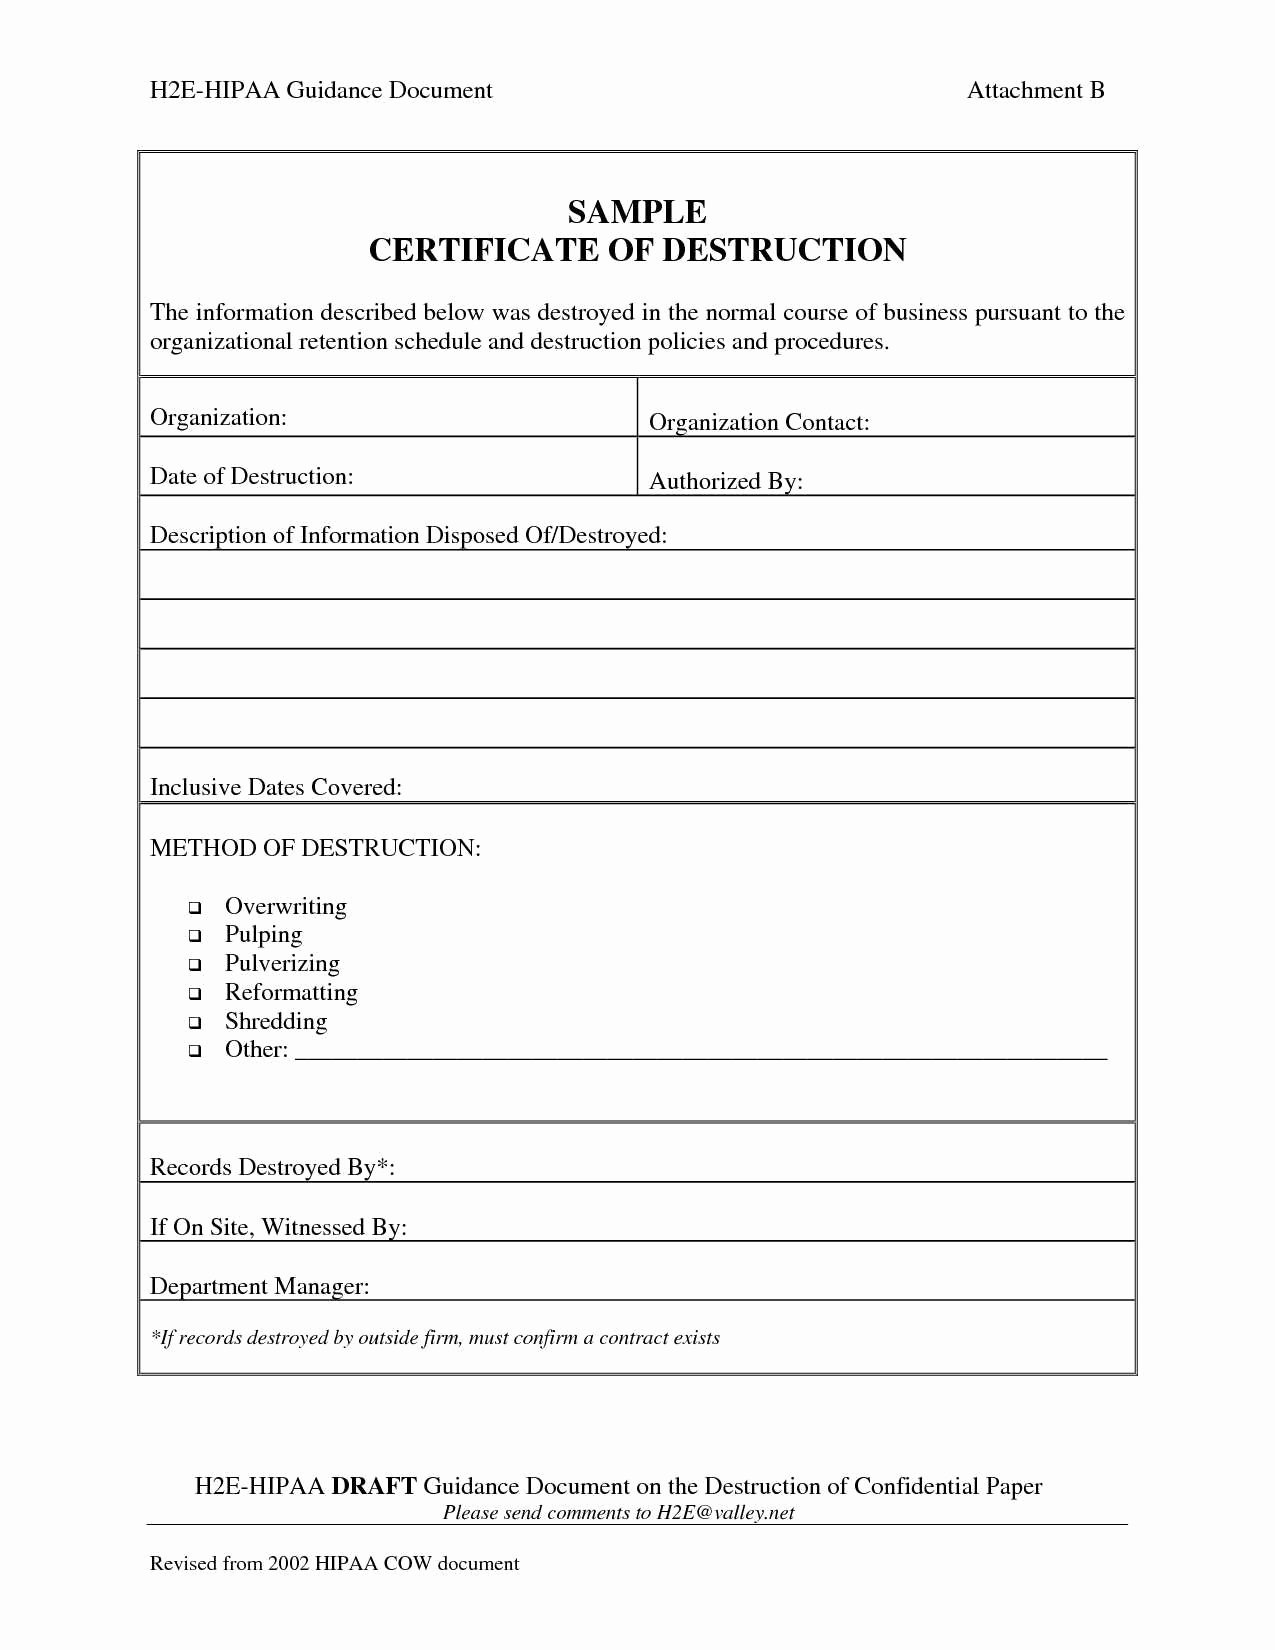 Hard Drive Destruction Certificate Template Luxury Certificate Destruction Template Word Reeviewer